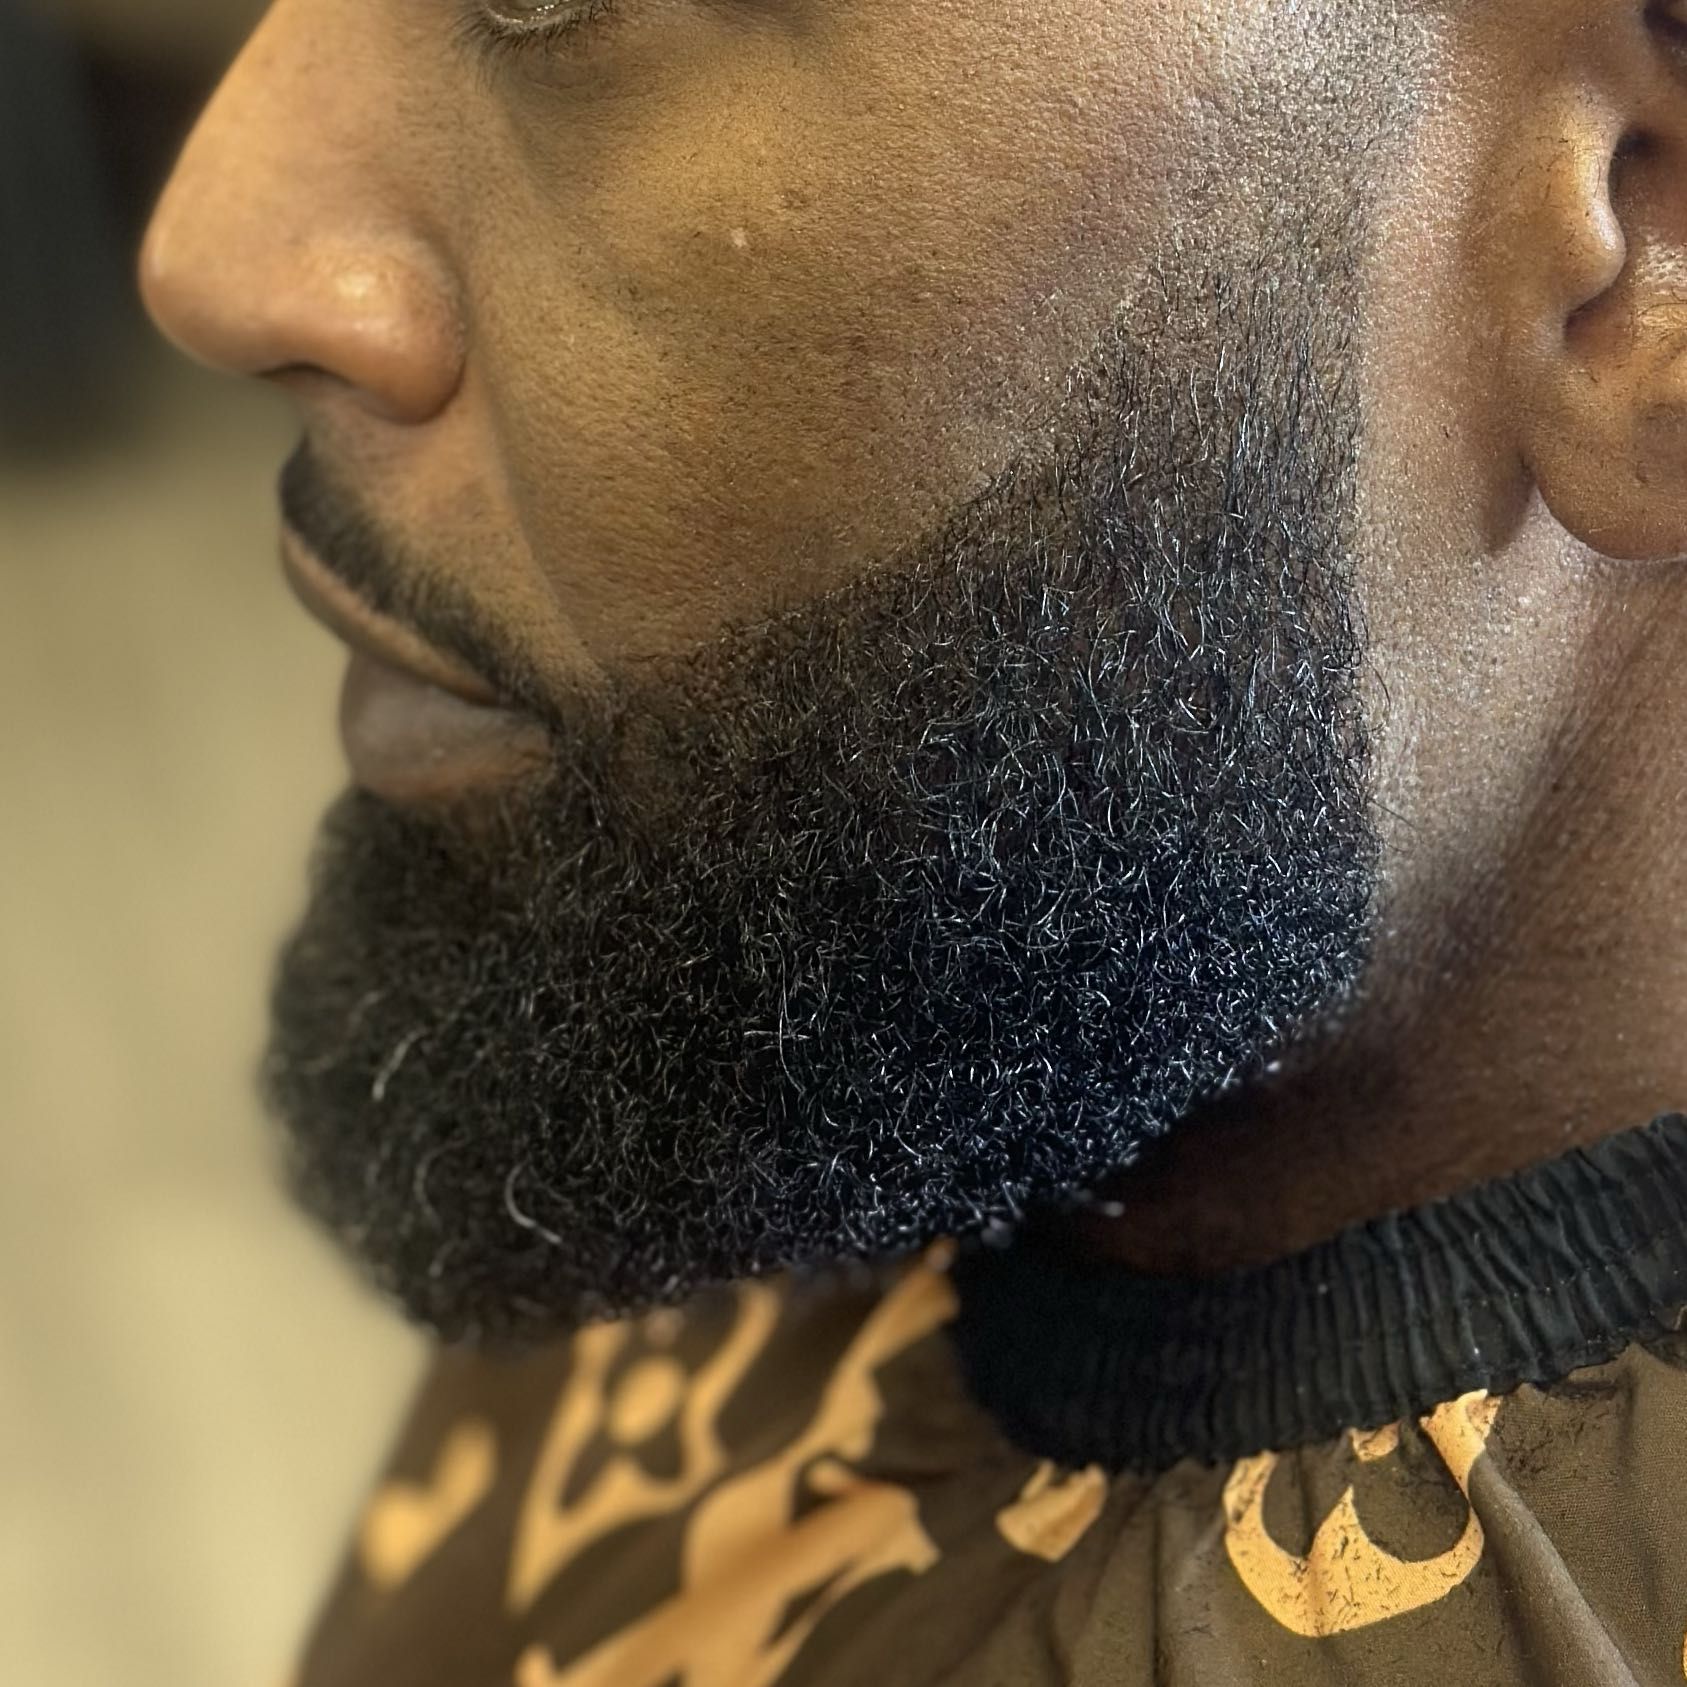 Beard trim with razor line up portfolio